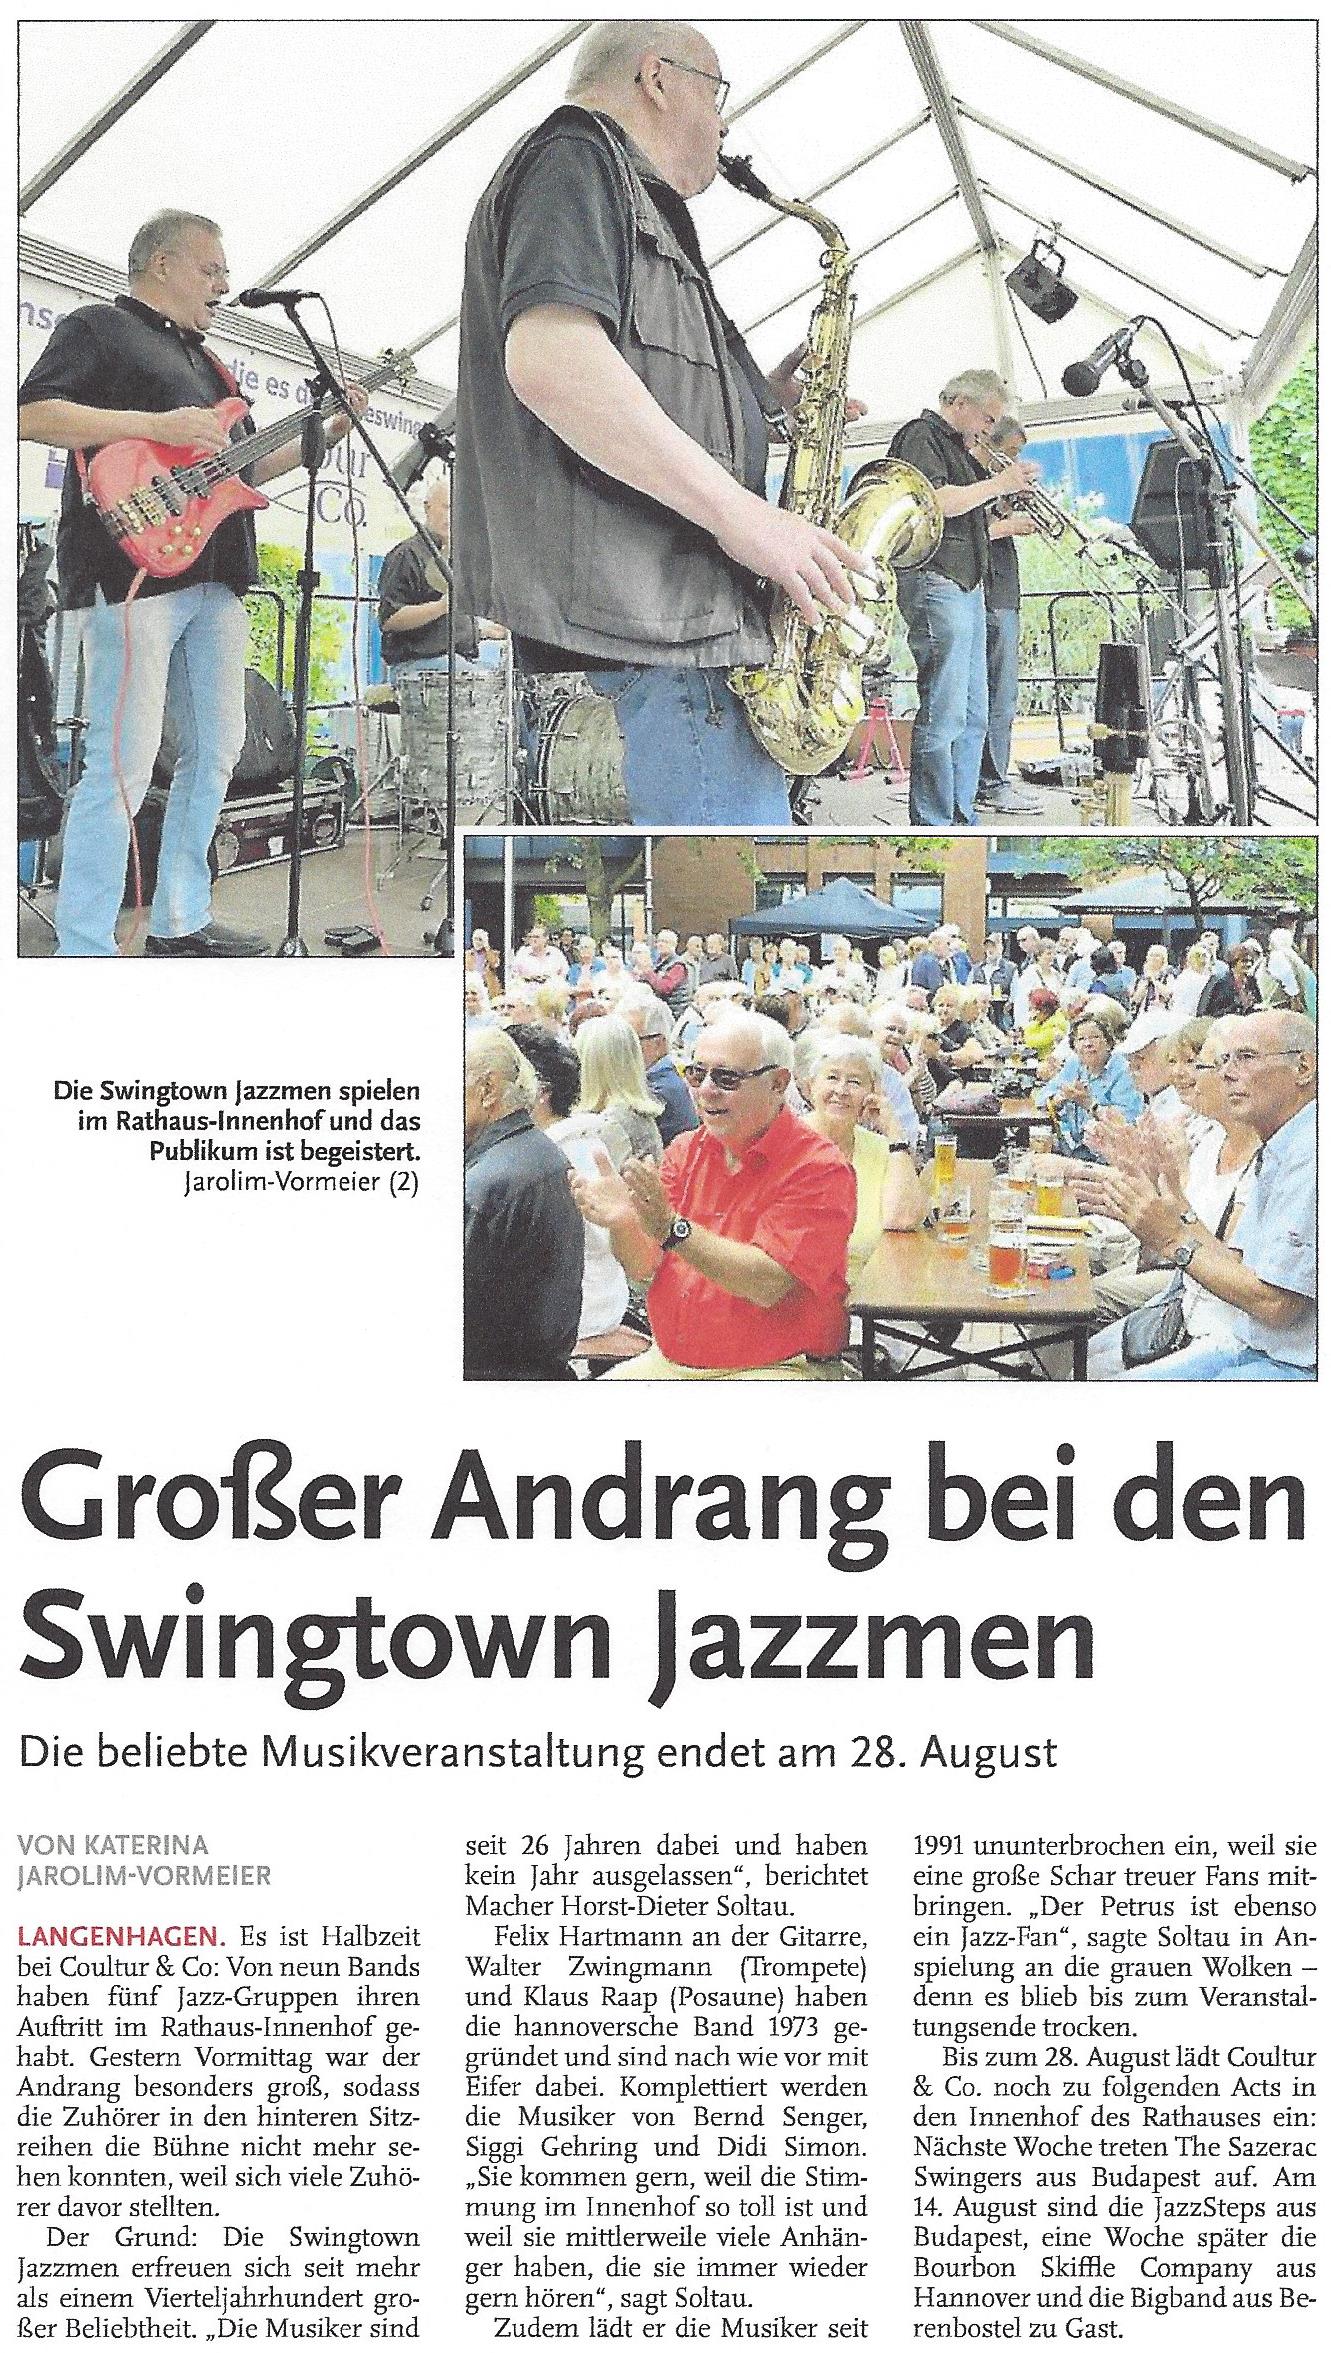 Großer Andrang bei den Swingtown Jazzmen